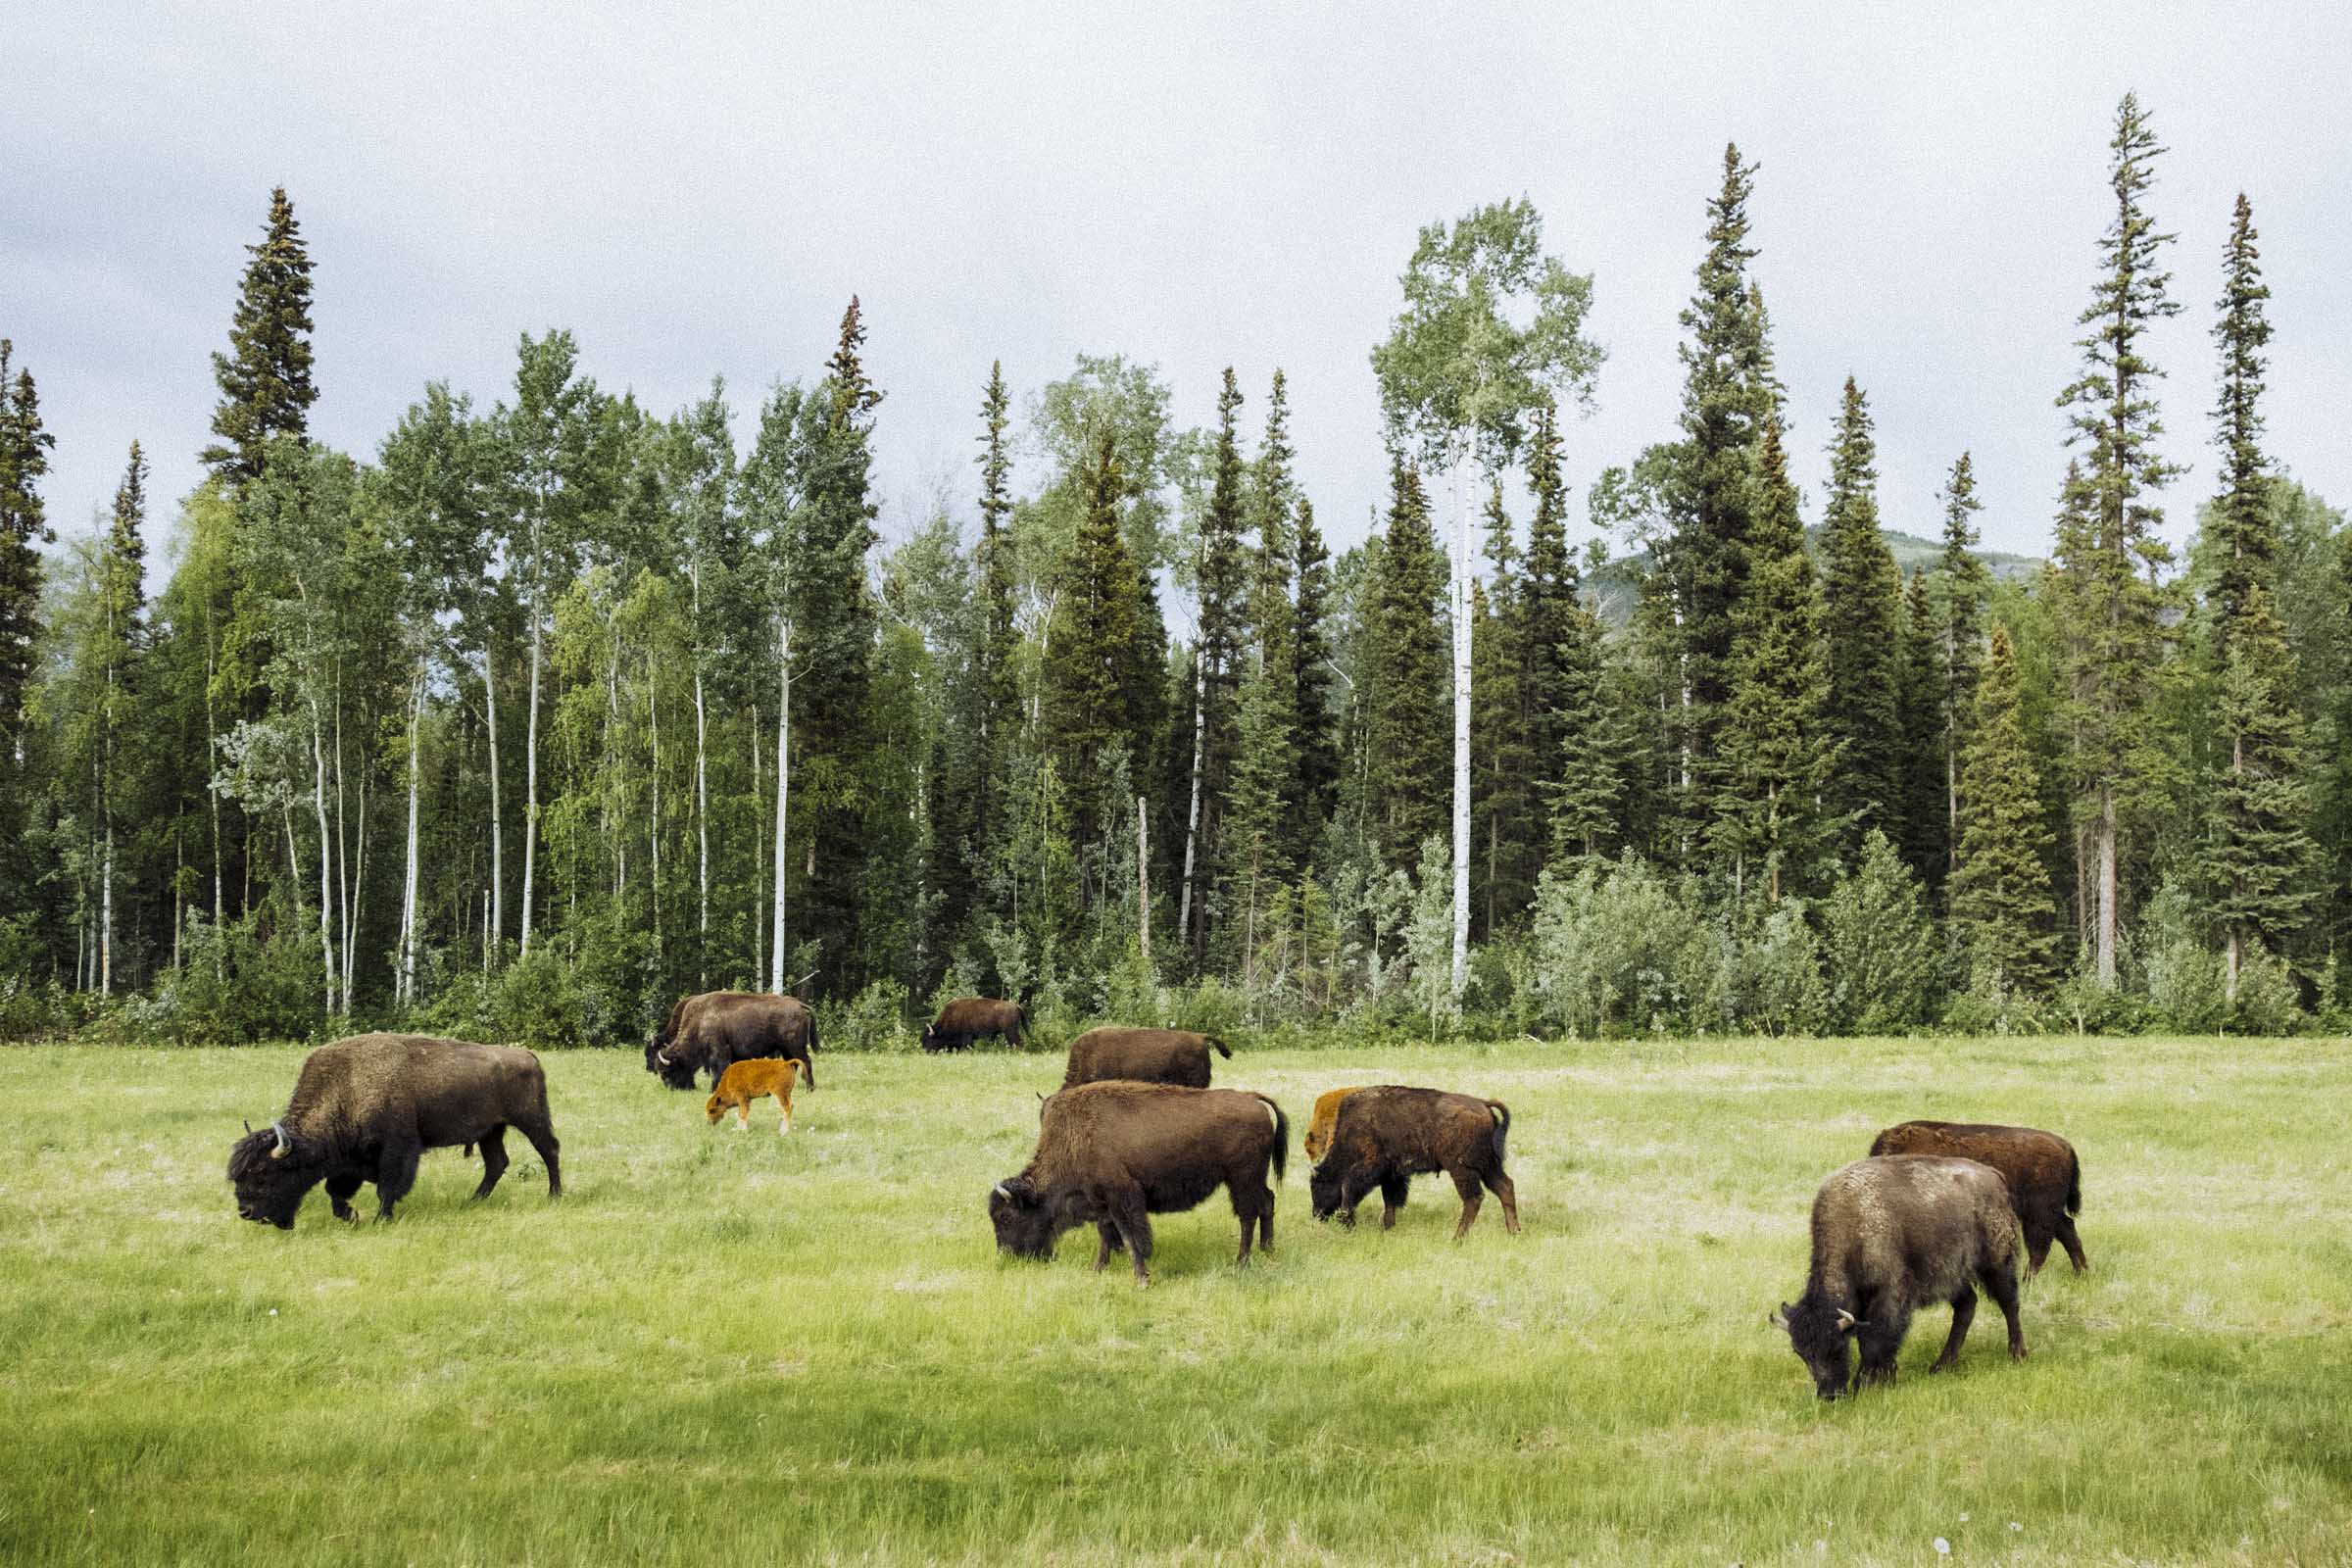 Buffalo grazing near the Alaska Hwy, Liard River